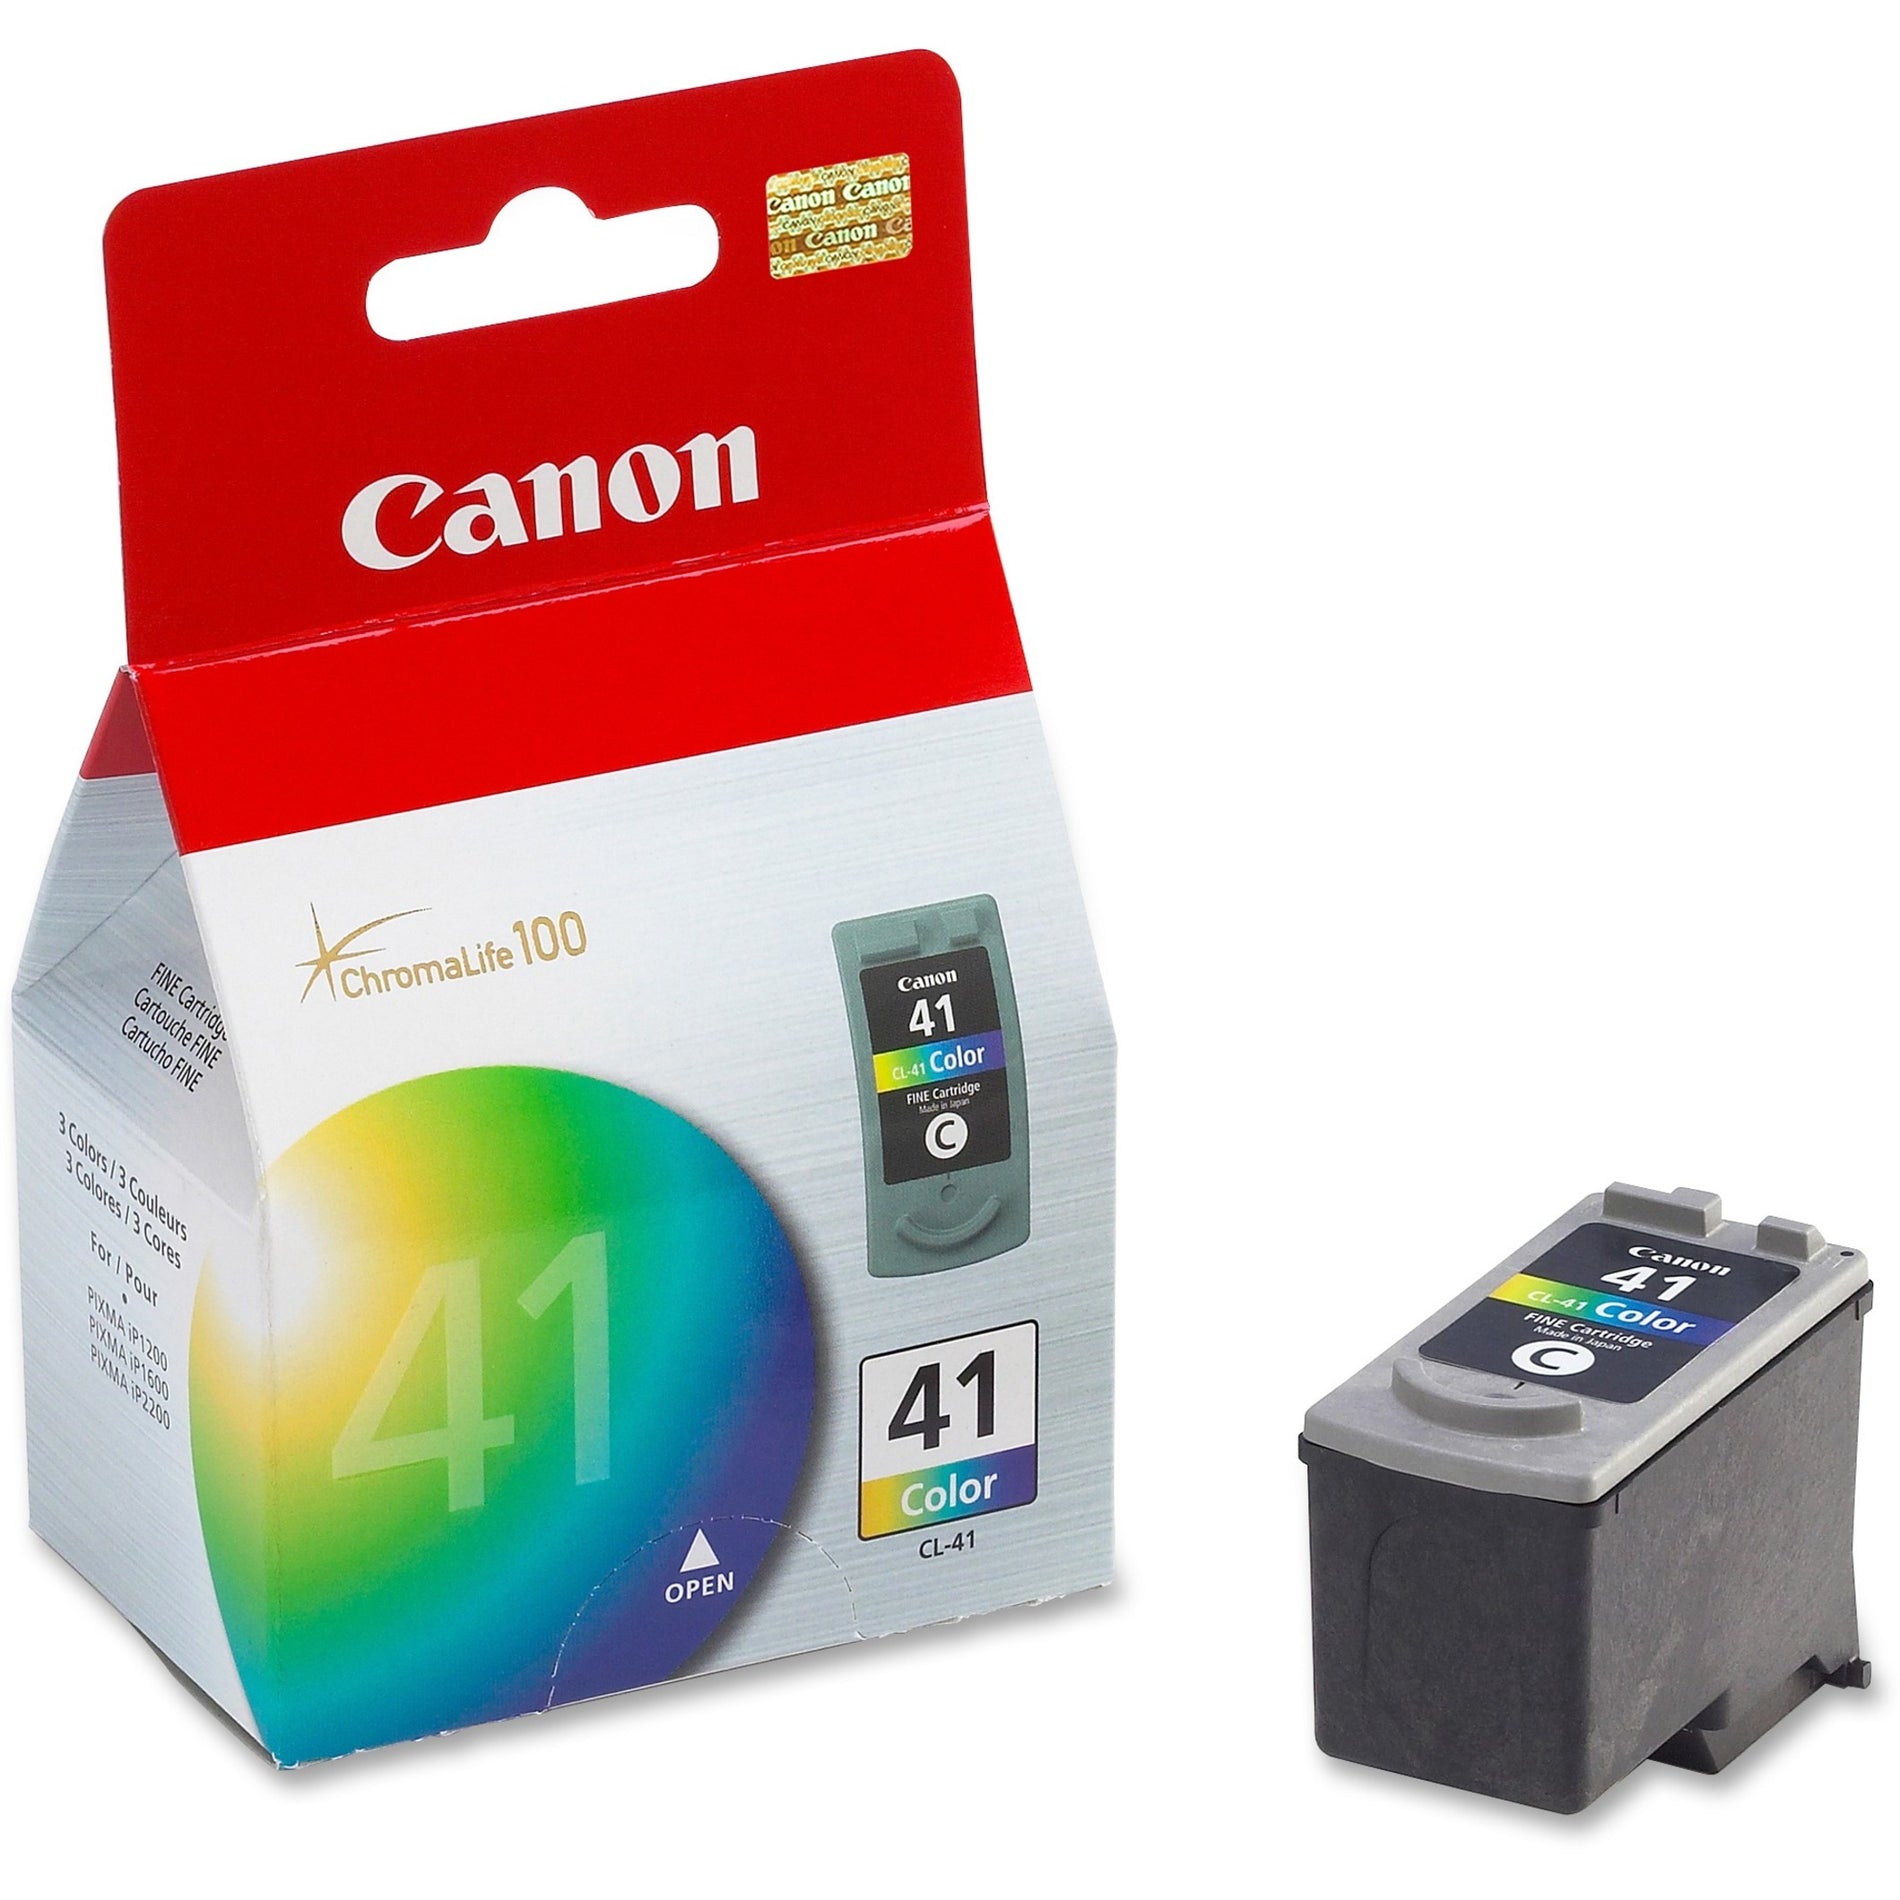 Canon 0617B002 CL-41 Ink Tank Cartridge, Tri-Color (Cyan, Yellow, Magenta), 12 mL